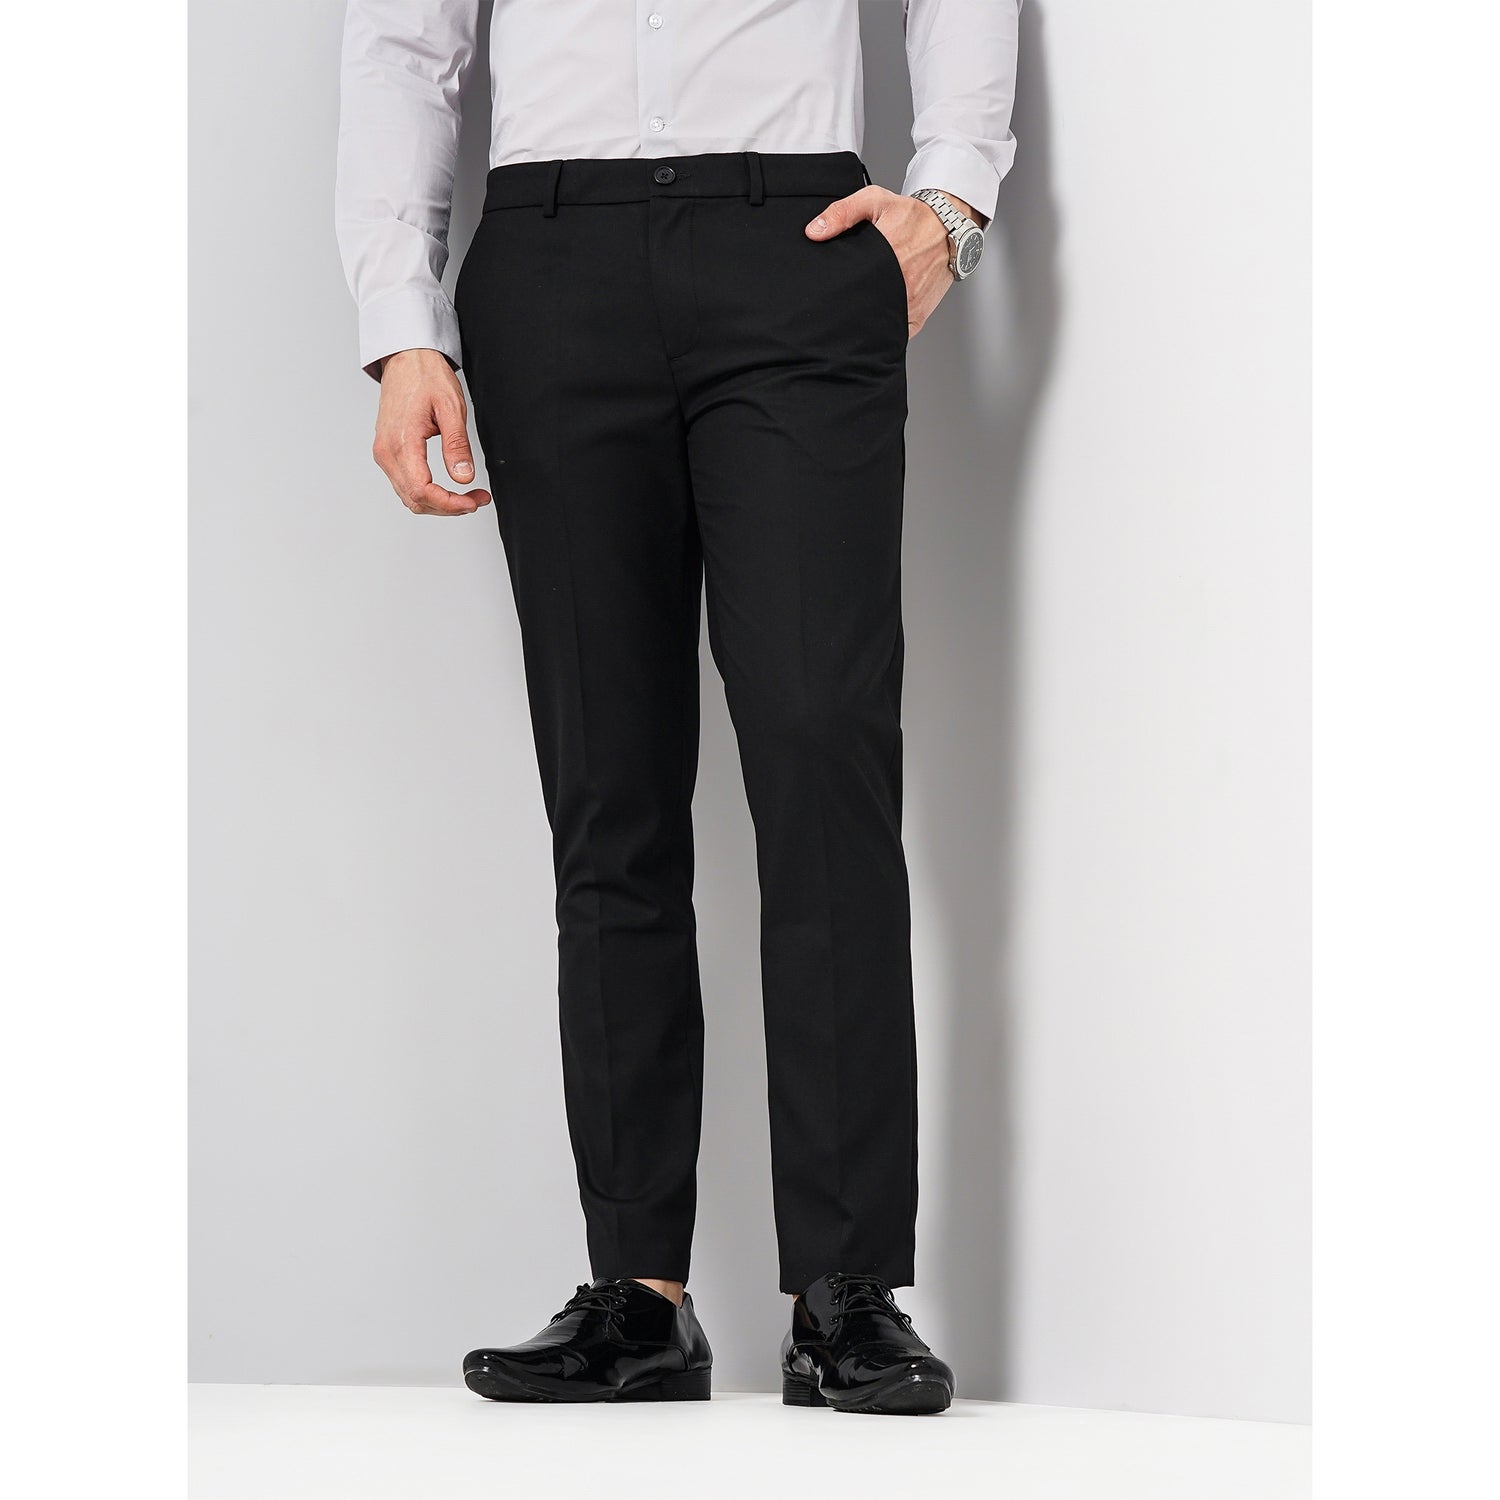 Men Black Solid Slim Fit Polyester Formal Trousers (GOSMARTY)